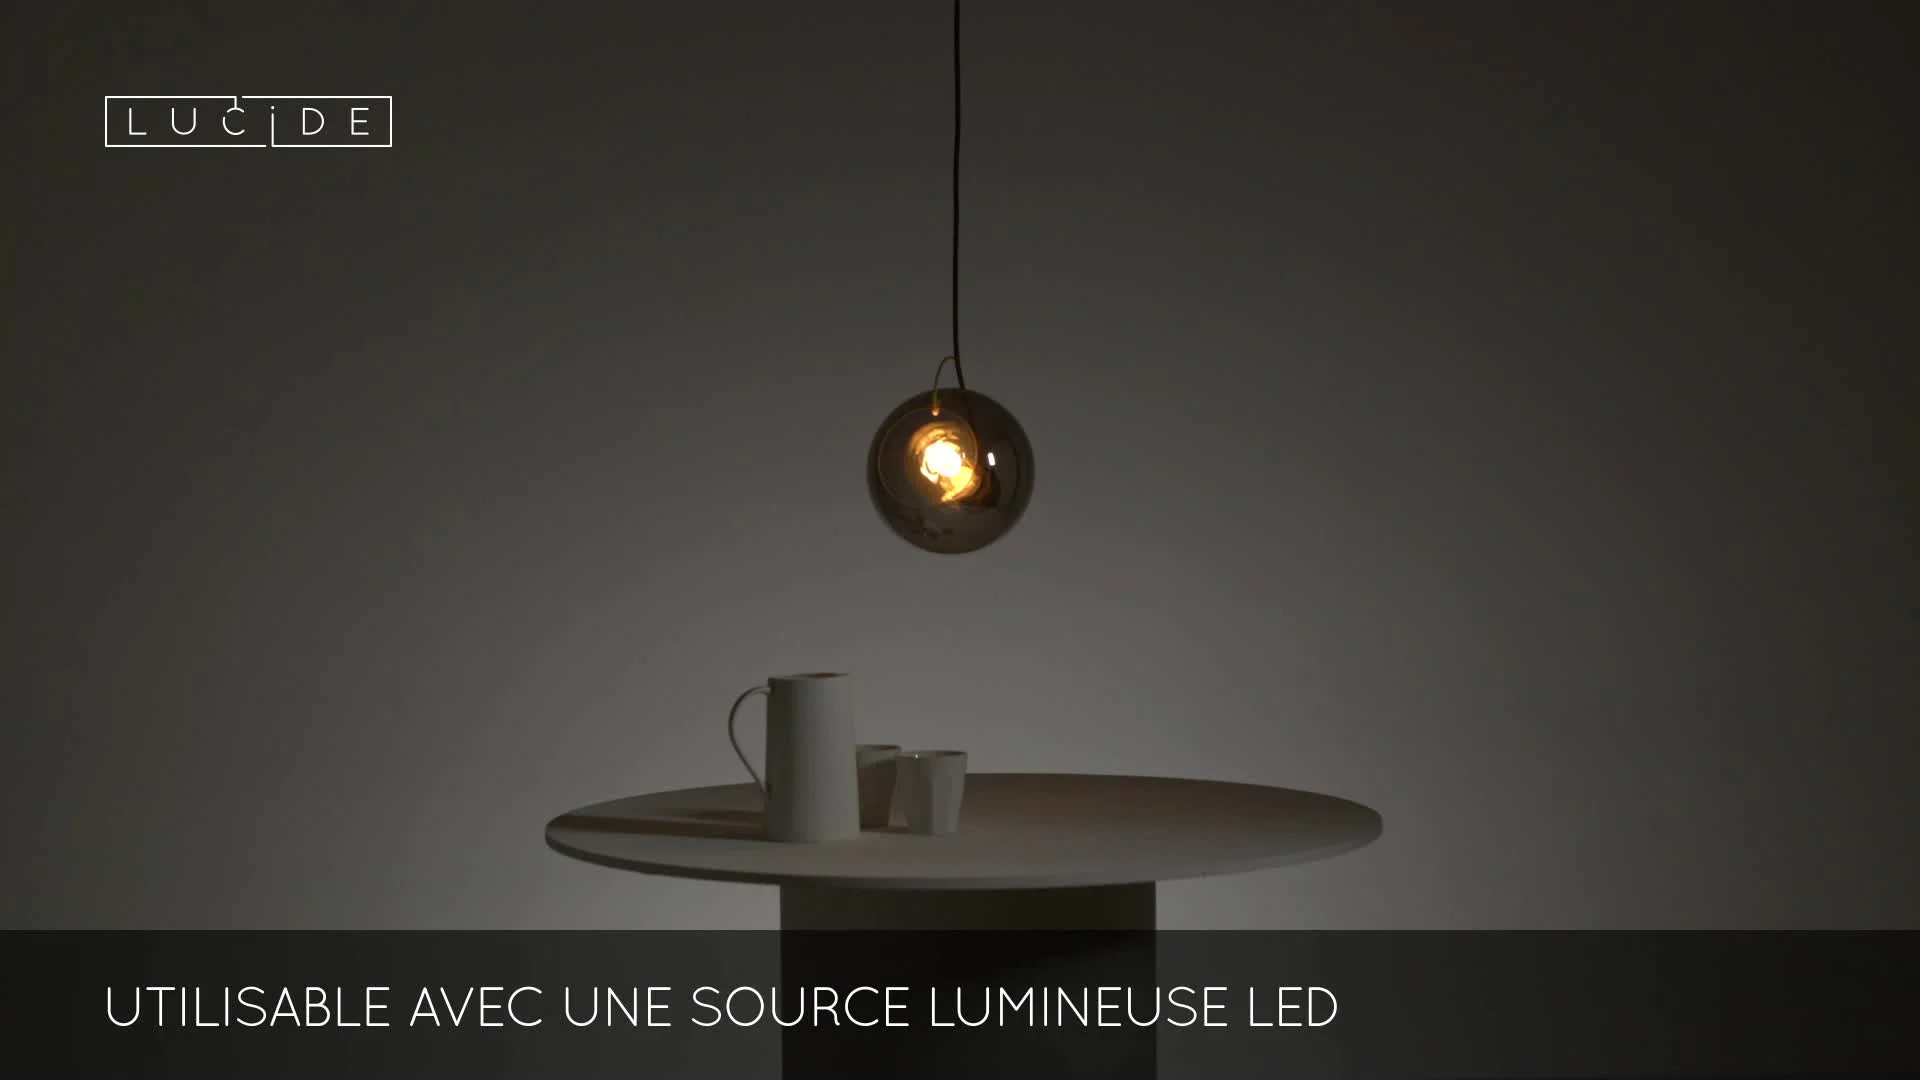 Lampe Bureau Vario LED Blanc 24656/10/31 Lucide